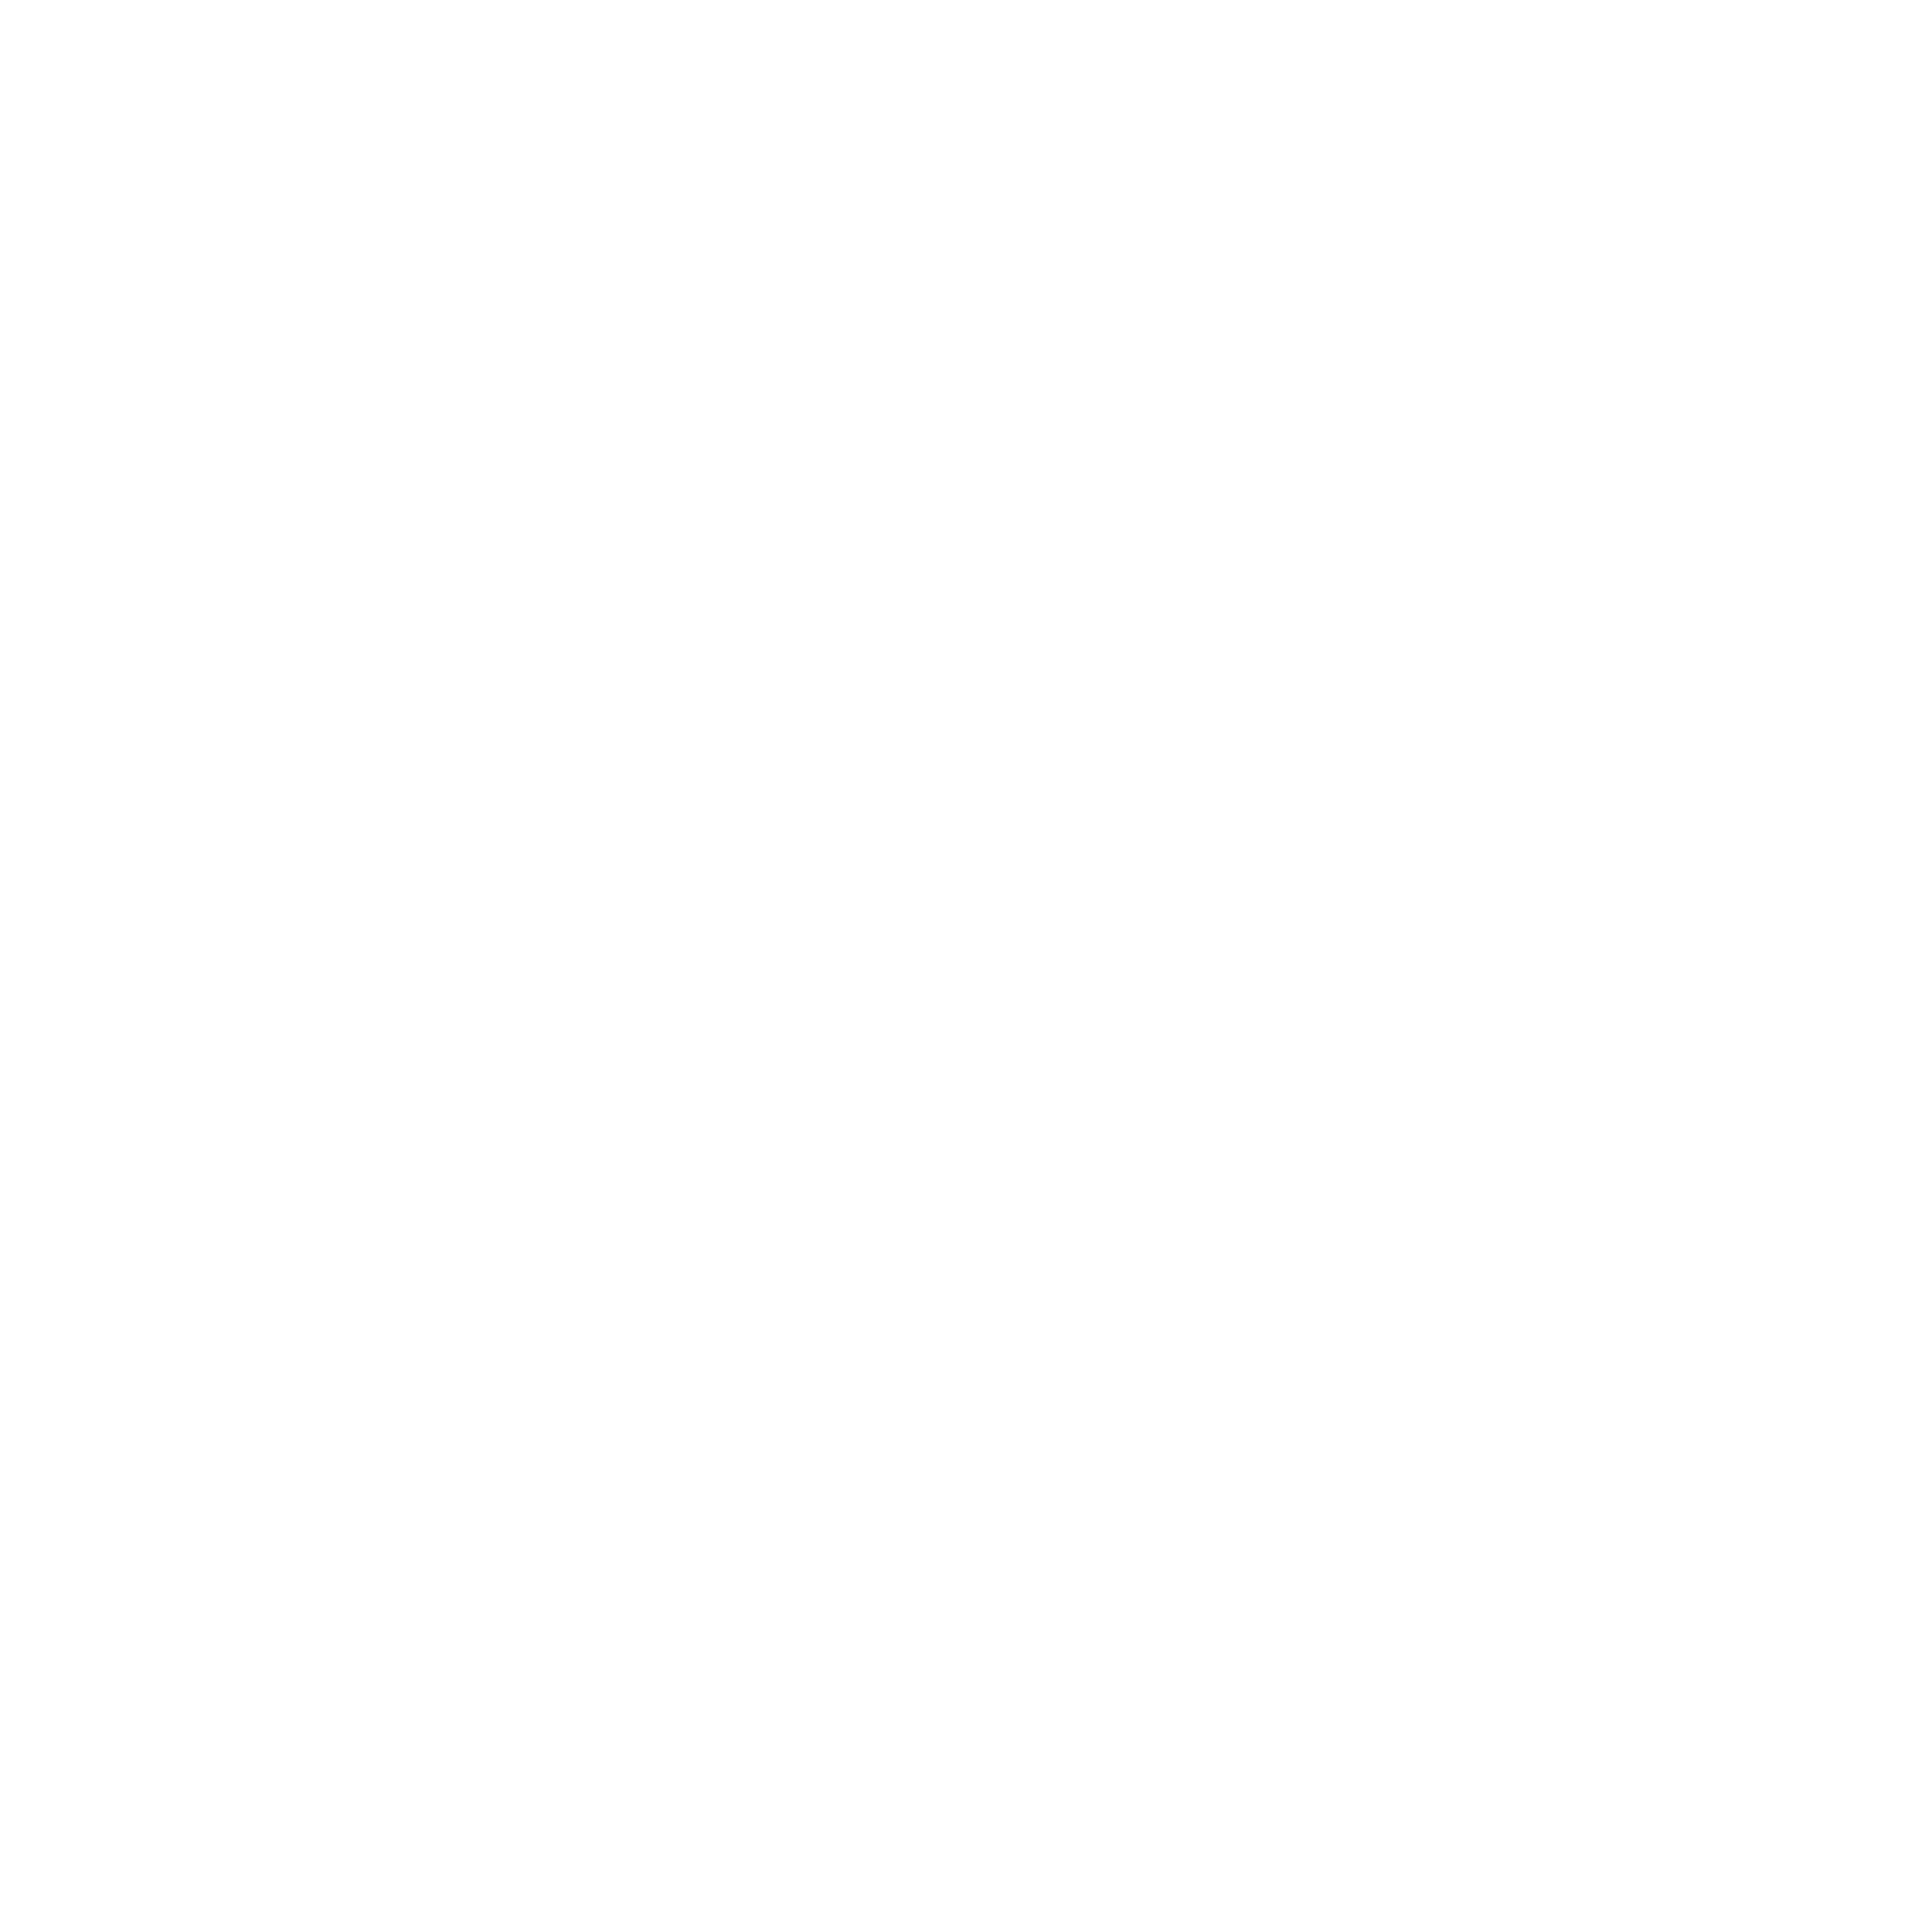 Hokkaido Skiing